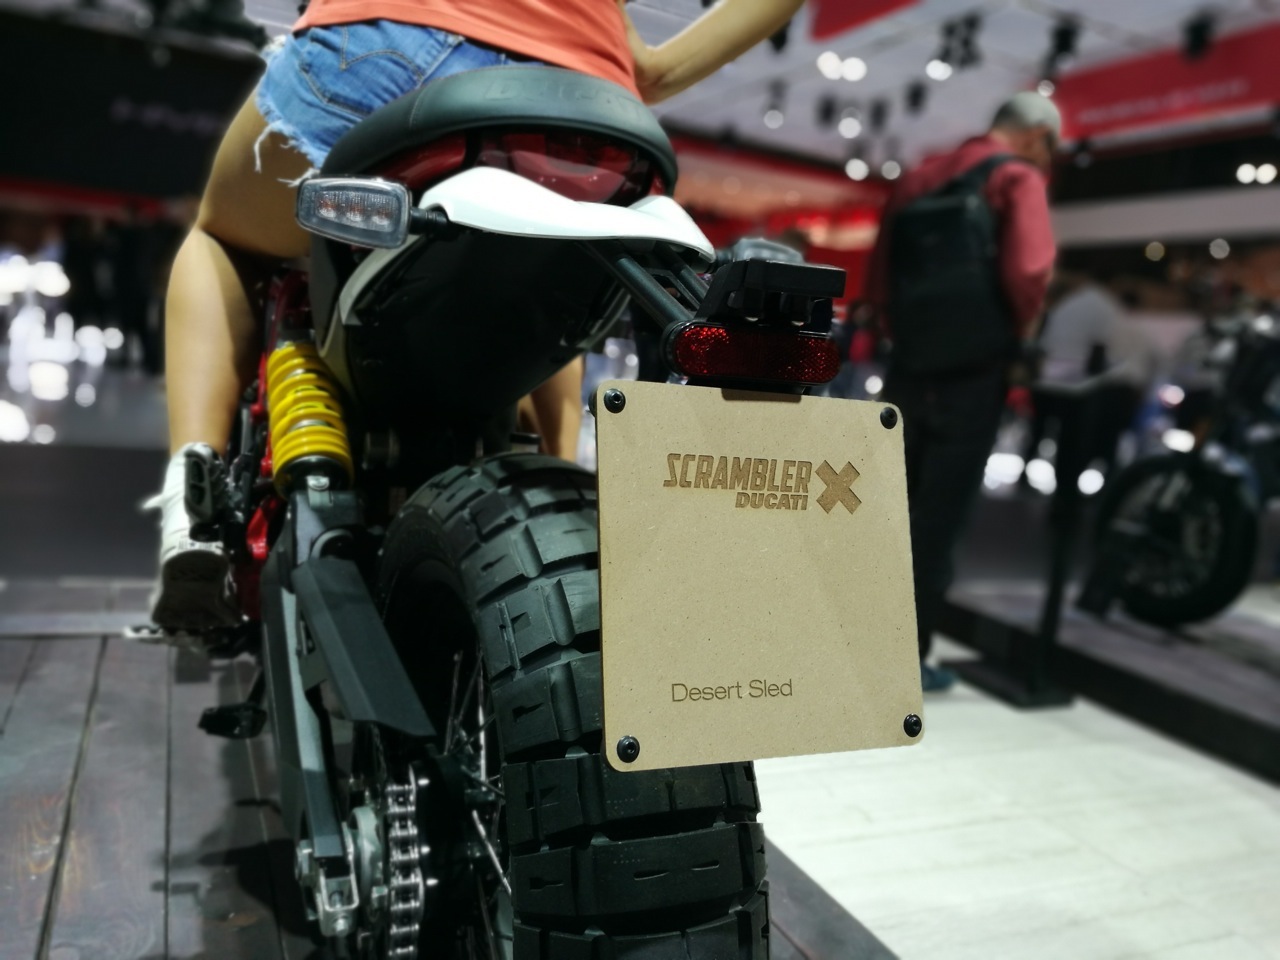 Ducati Scrambler 800 - EICMA 2018